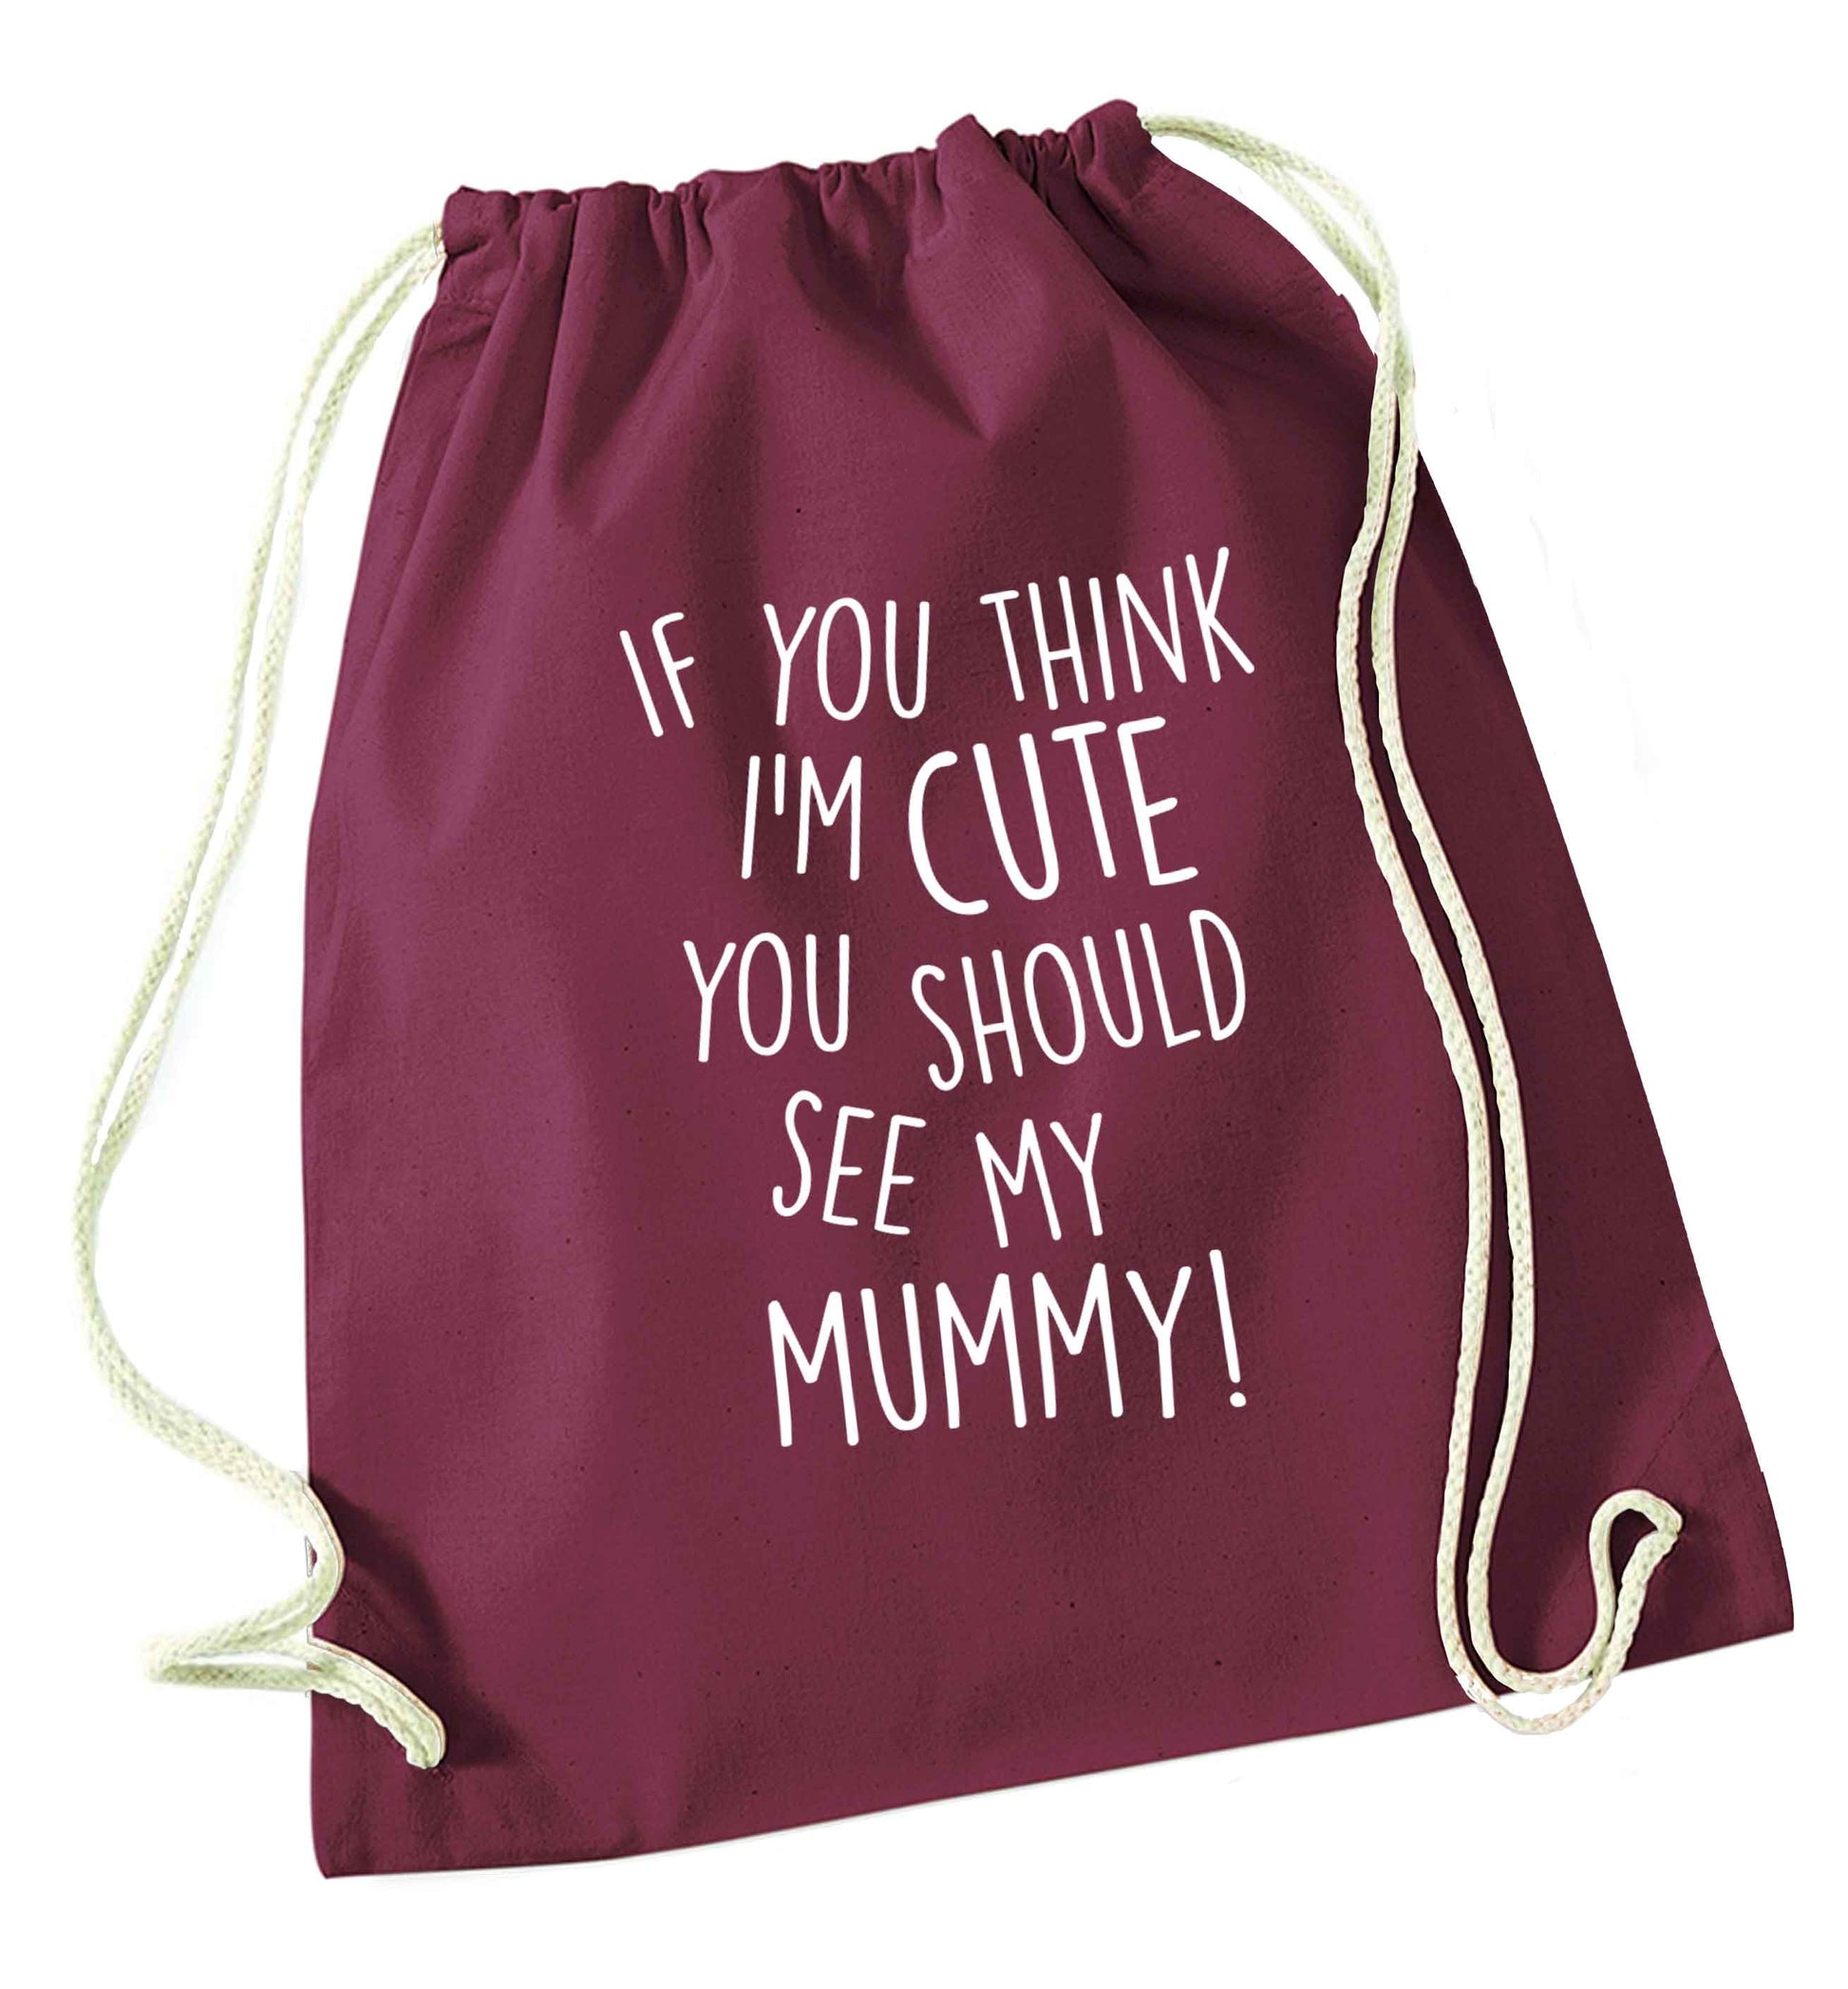 If you think I'm cute you should see my mummy maroon drawstring bag